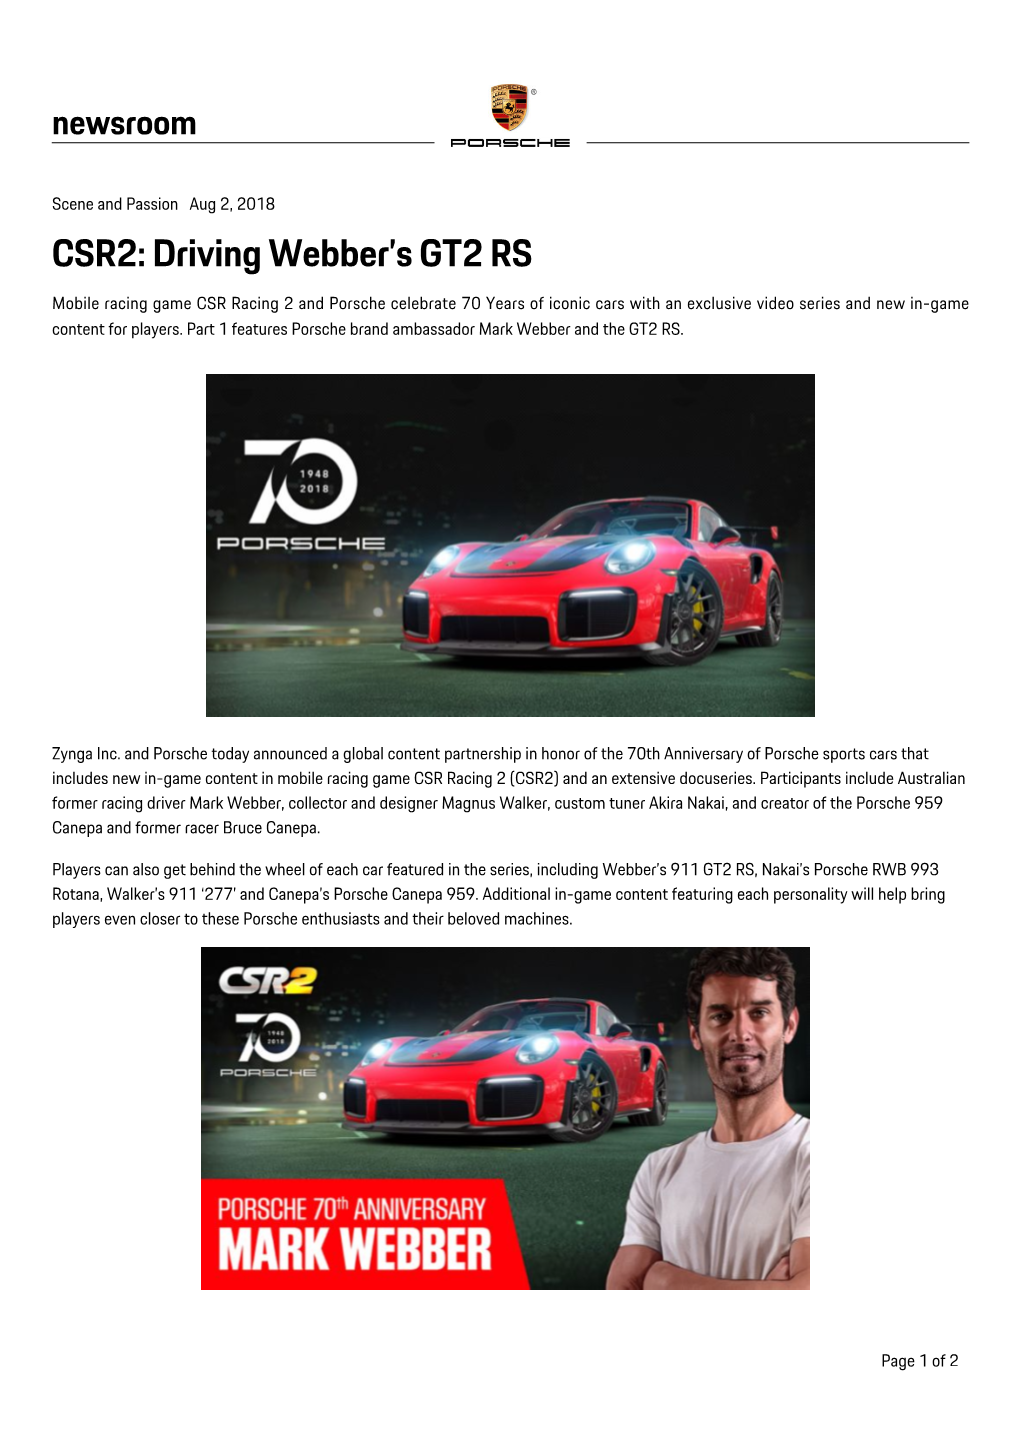 Driving Webber's GT2 RS